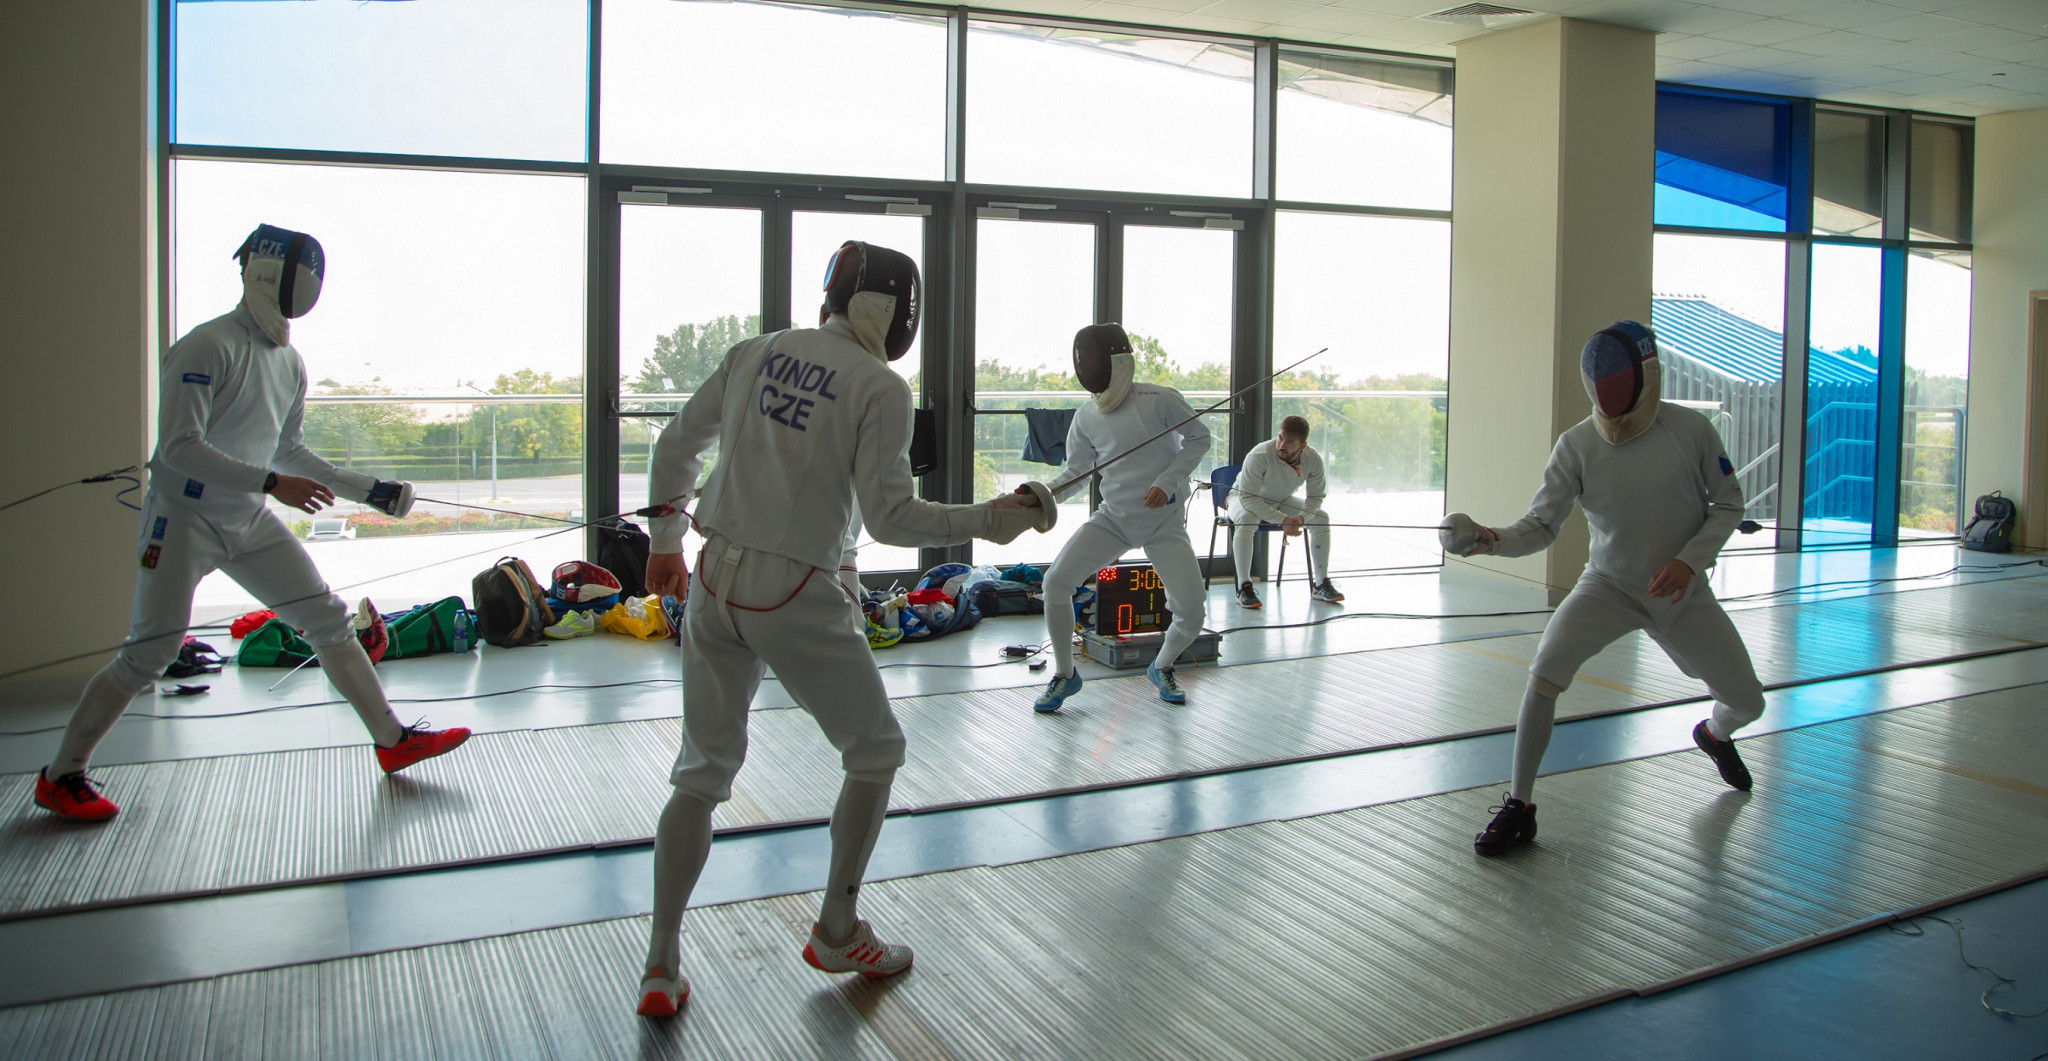 Czech modern pentathlon team attend camp in Dubai to train for Tokyo 2020